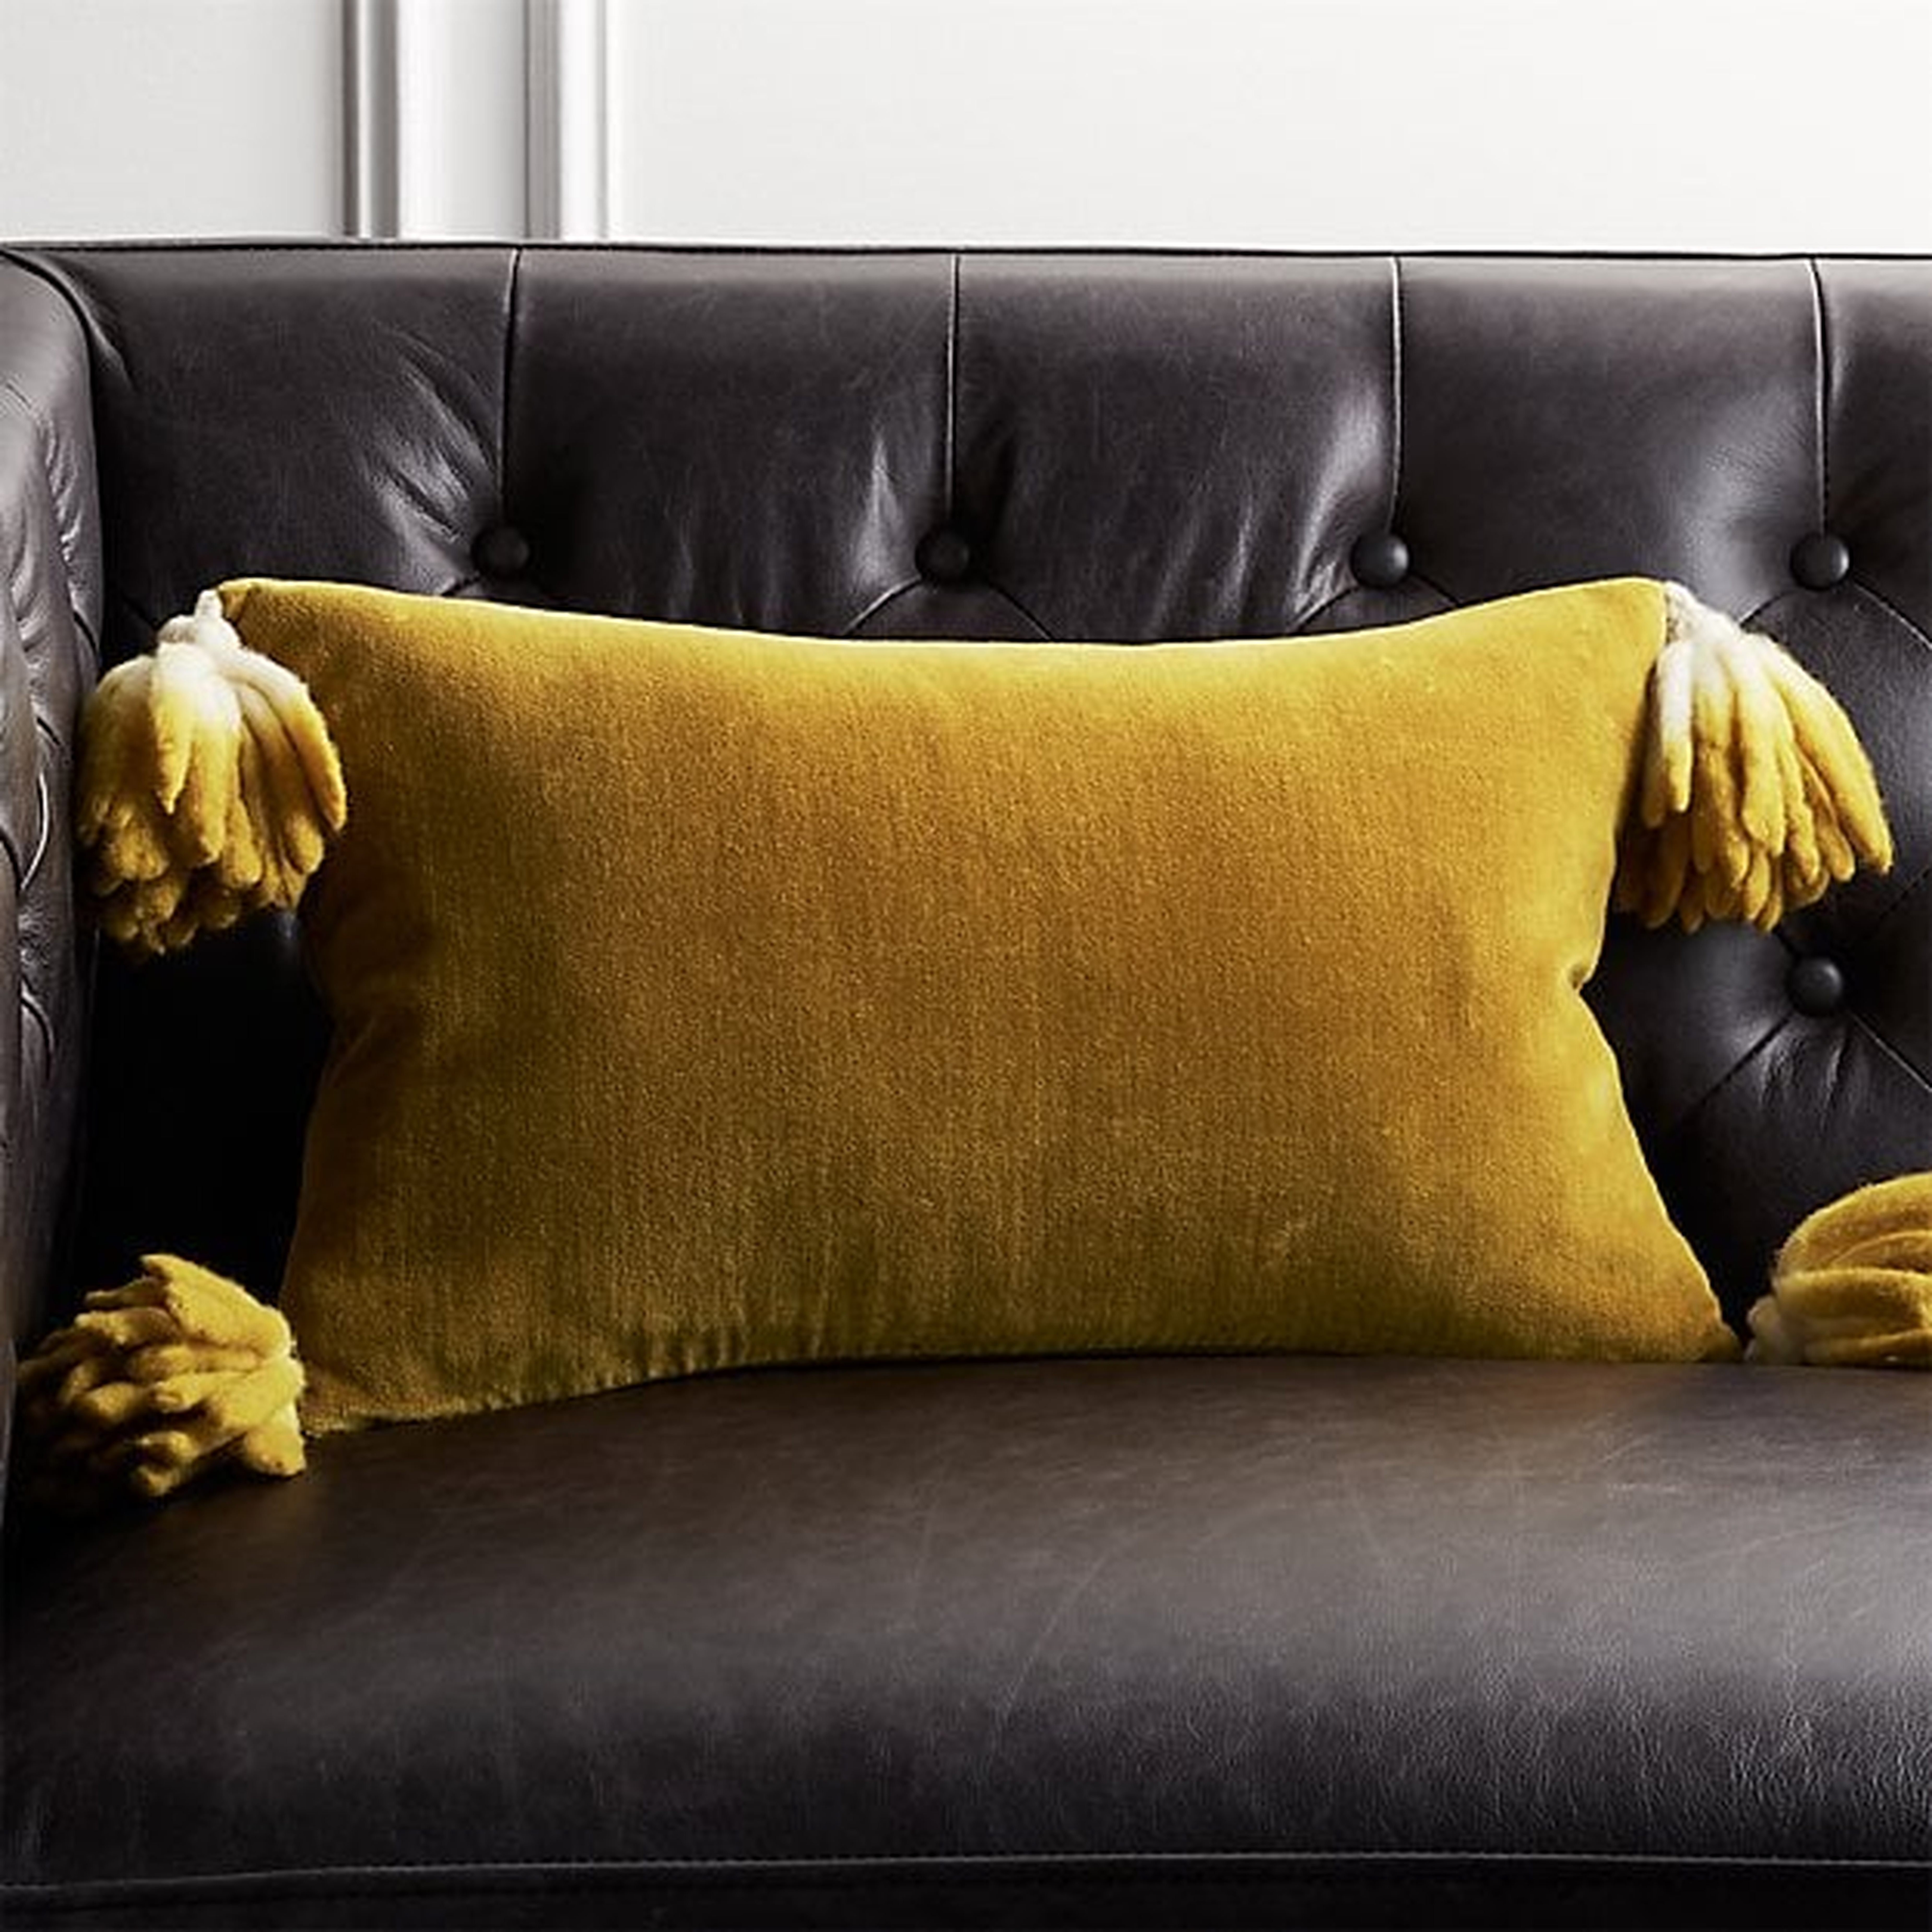 18"x12" Bia Tassel Mustard Velvet Pillow with Feather-Down Insert - CB2